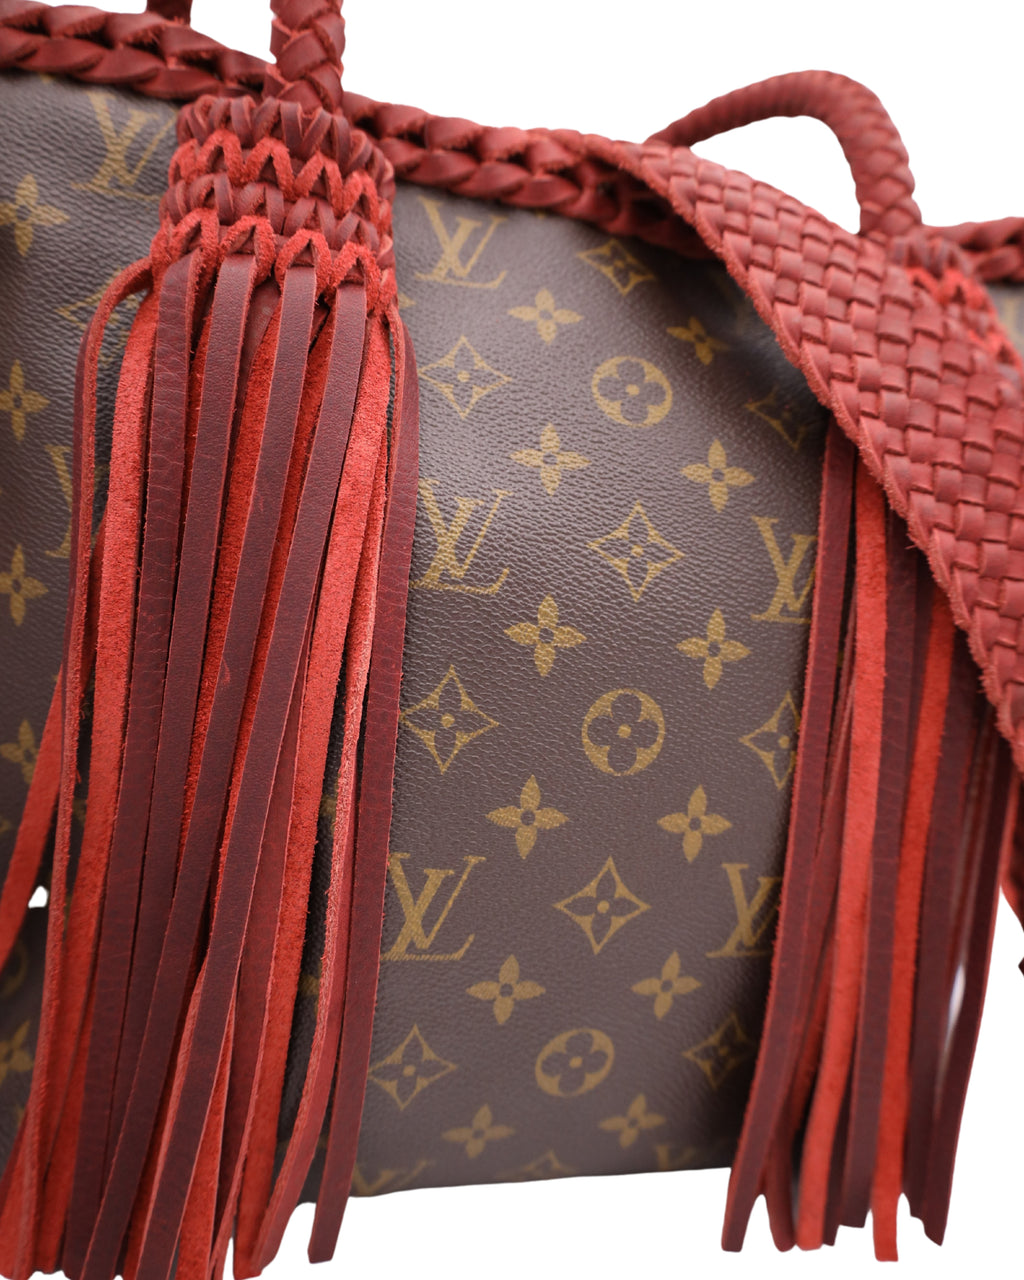 Louis Vuitton - Authenticated Rivets Handbag - Leather Black Plain for Women, Very Good Condition